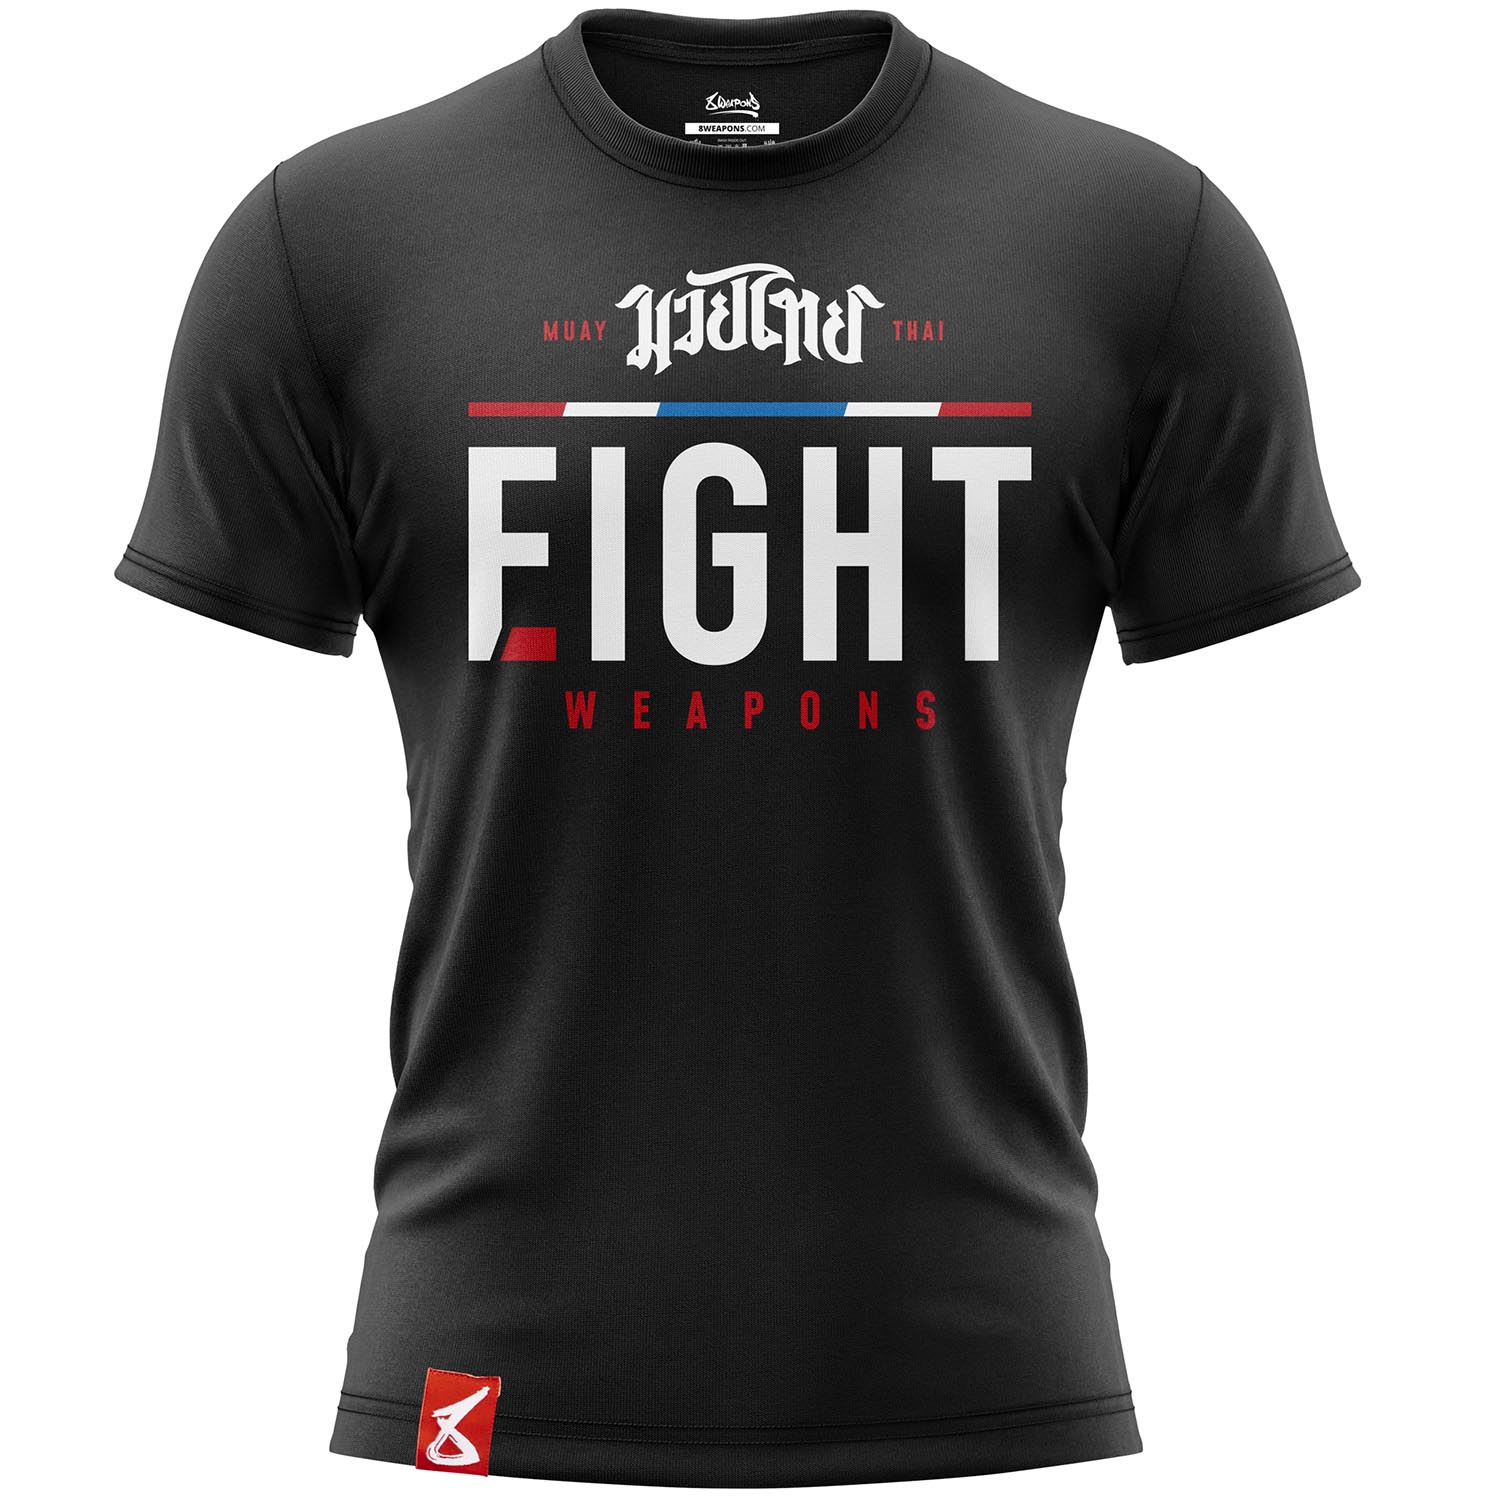 8 WEAPONS Muay Thai T-Shirt, The Fight, schwarz, XXL